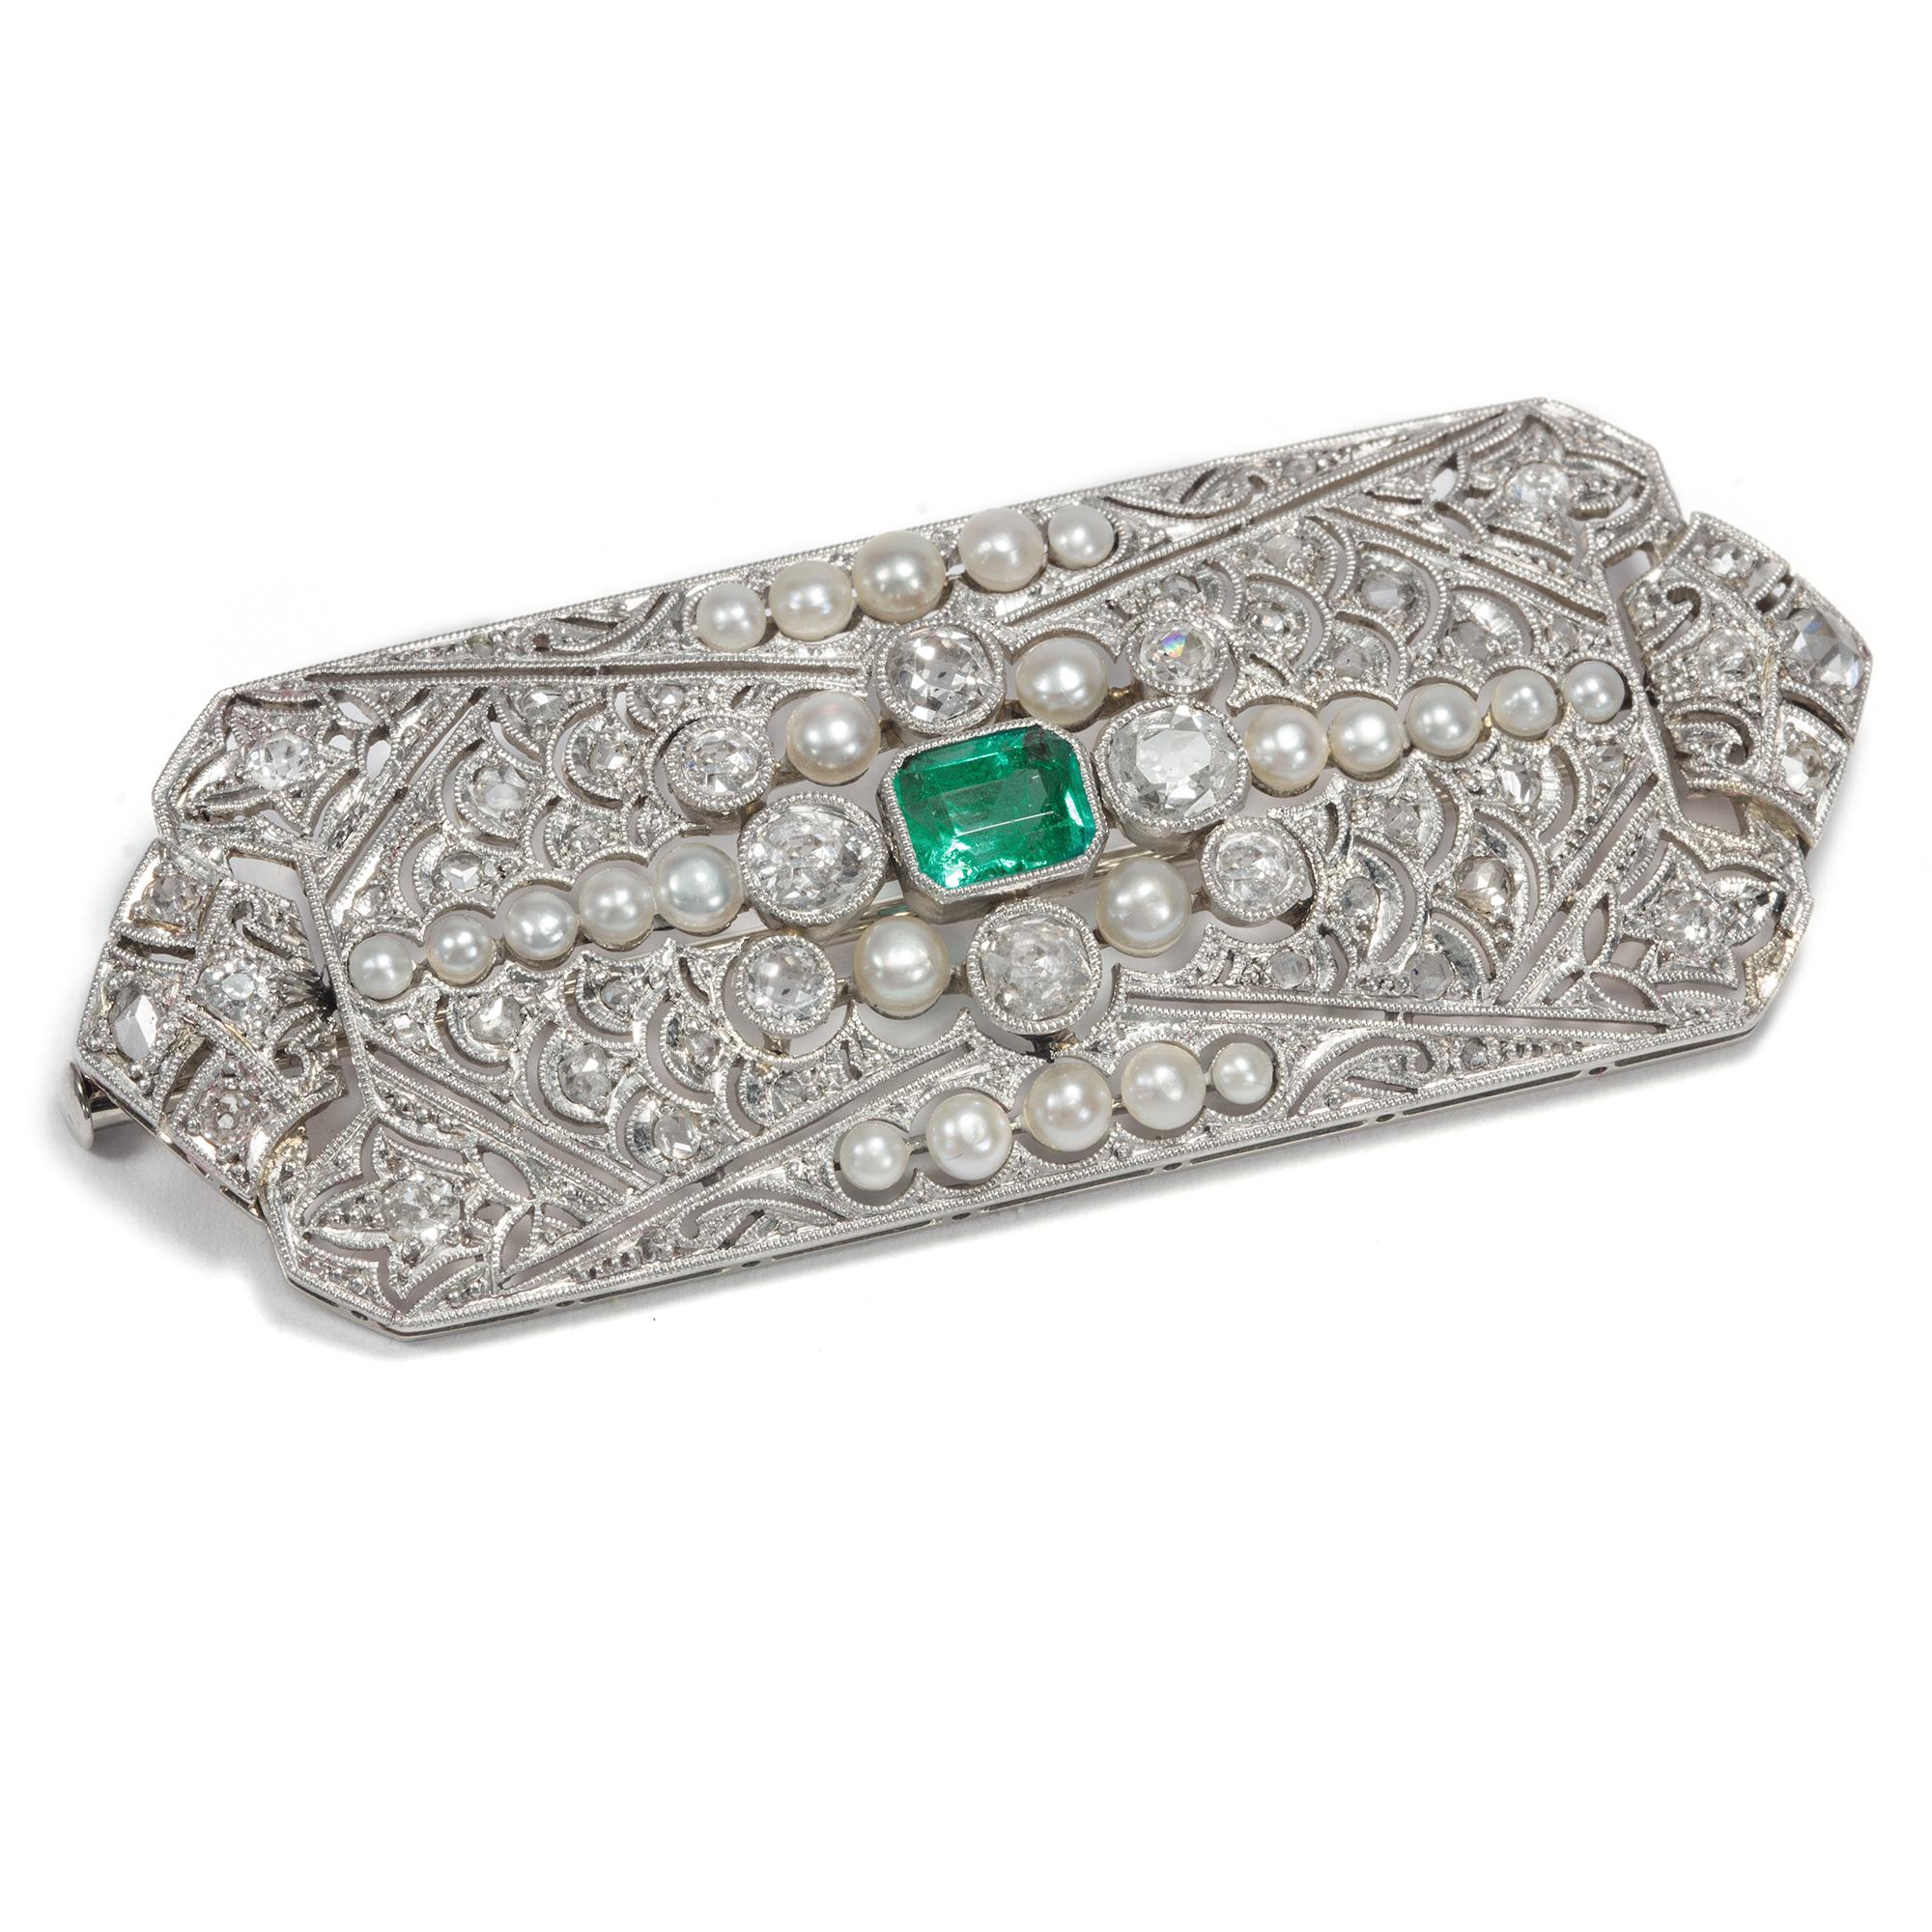 Old European Cut Art Déco circa 1925: Certified Emerald Diamond Natural Pearl White Gold Brooch